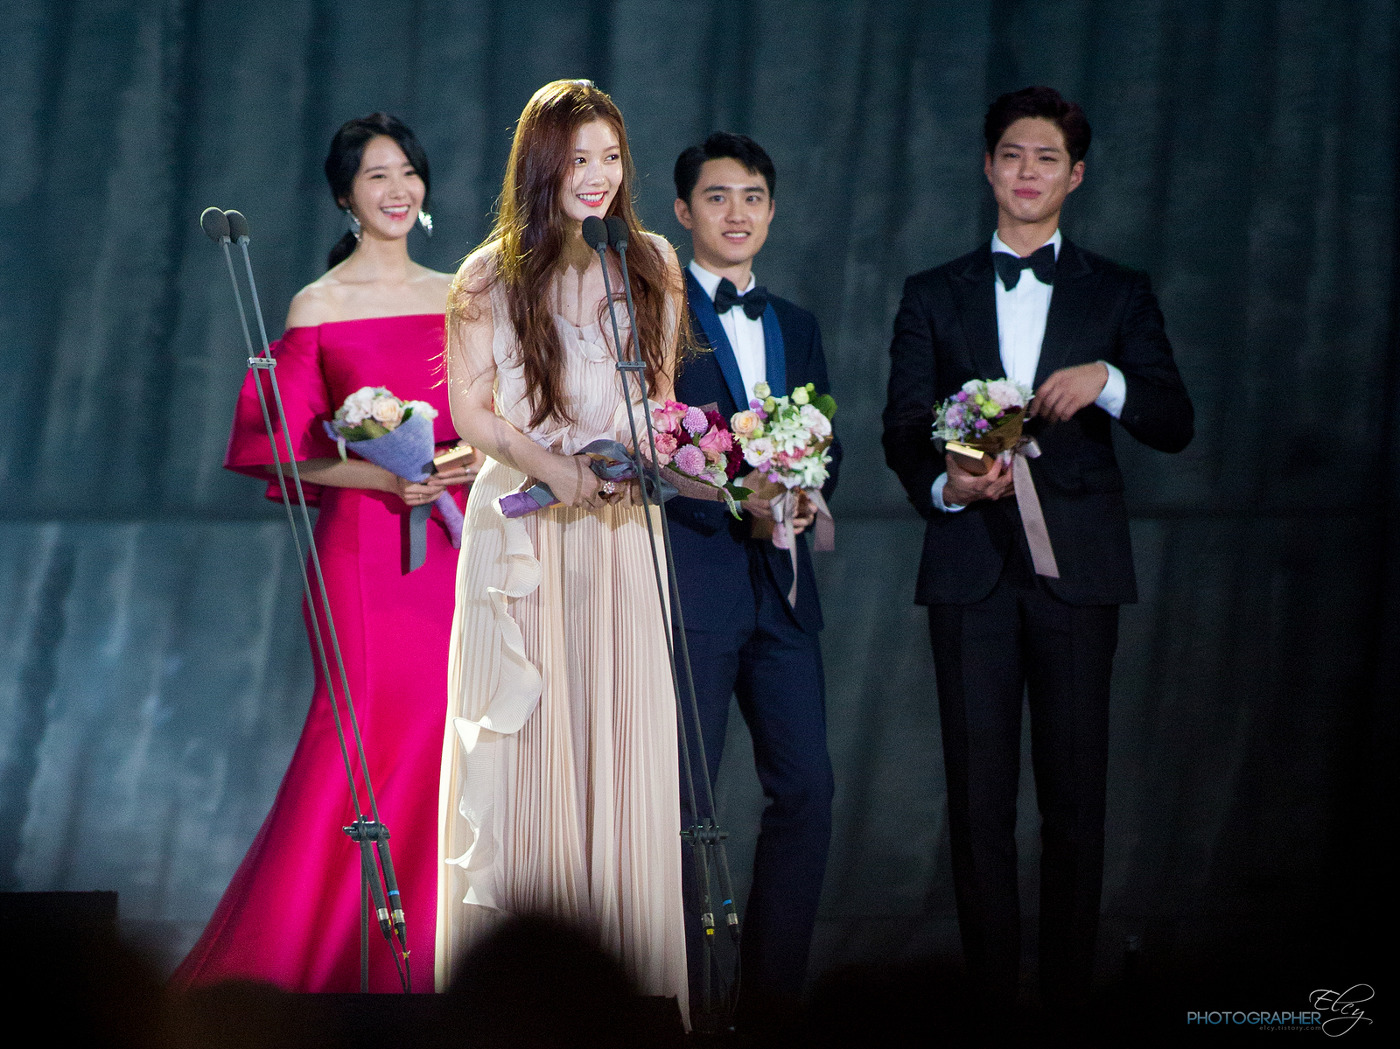 [PIC][03-05-2017]YoonA tham dự "53rd Baeksang Arts Awards" vào chiều nay + Giành "Most Popular Actress or Star Century Popularity Award (in Film)" - Page 3 2620DB445916FB6119AF2A